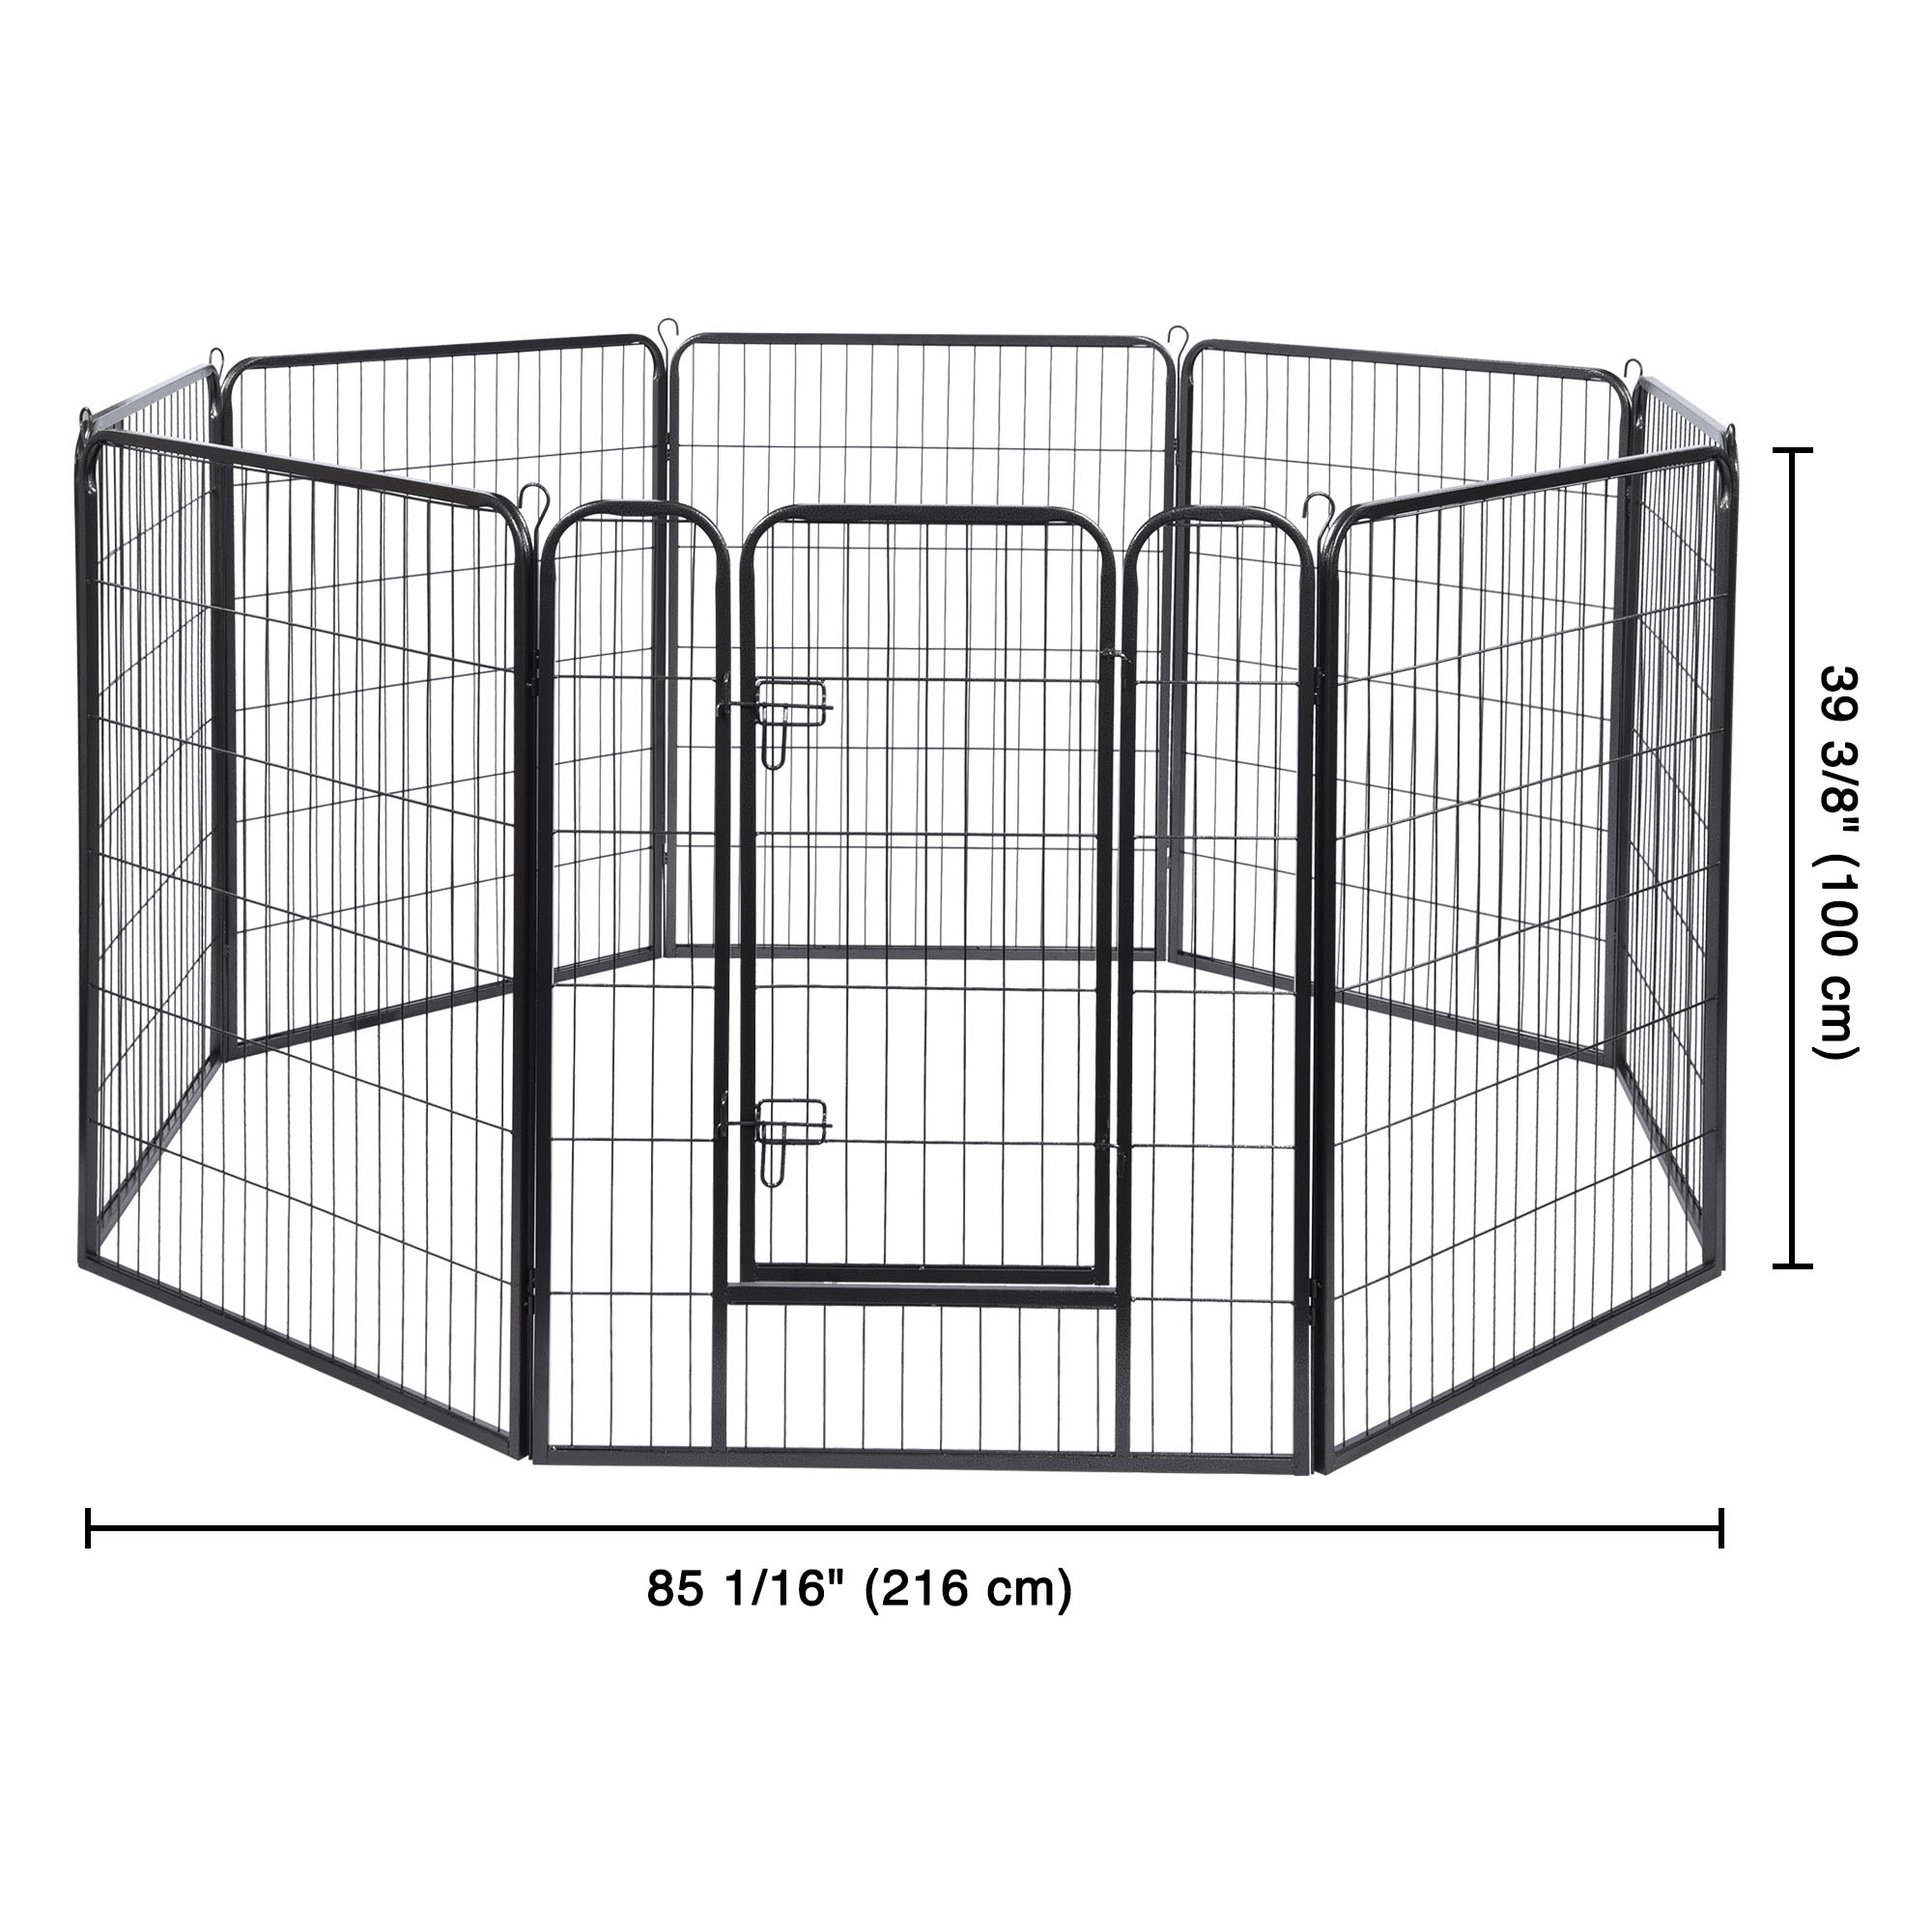 Yescom 32 Pieces 31"x39" Pet Playpen Extra Large Dog Exercise Fence Panel Crate Yard